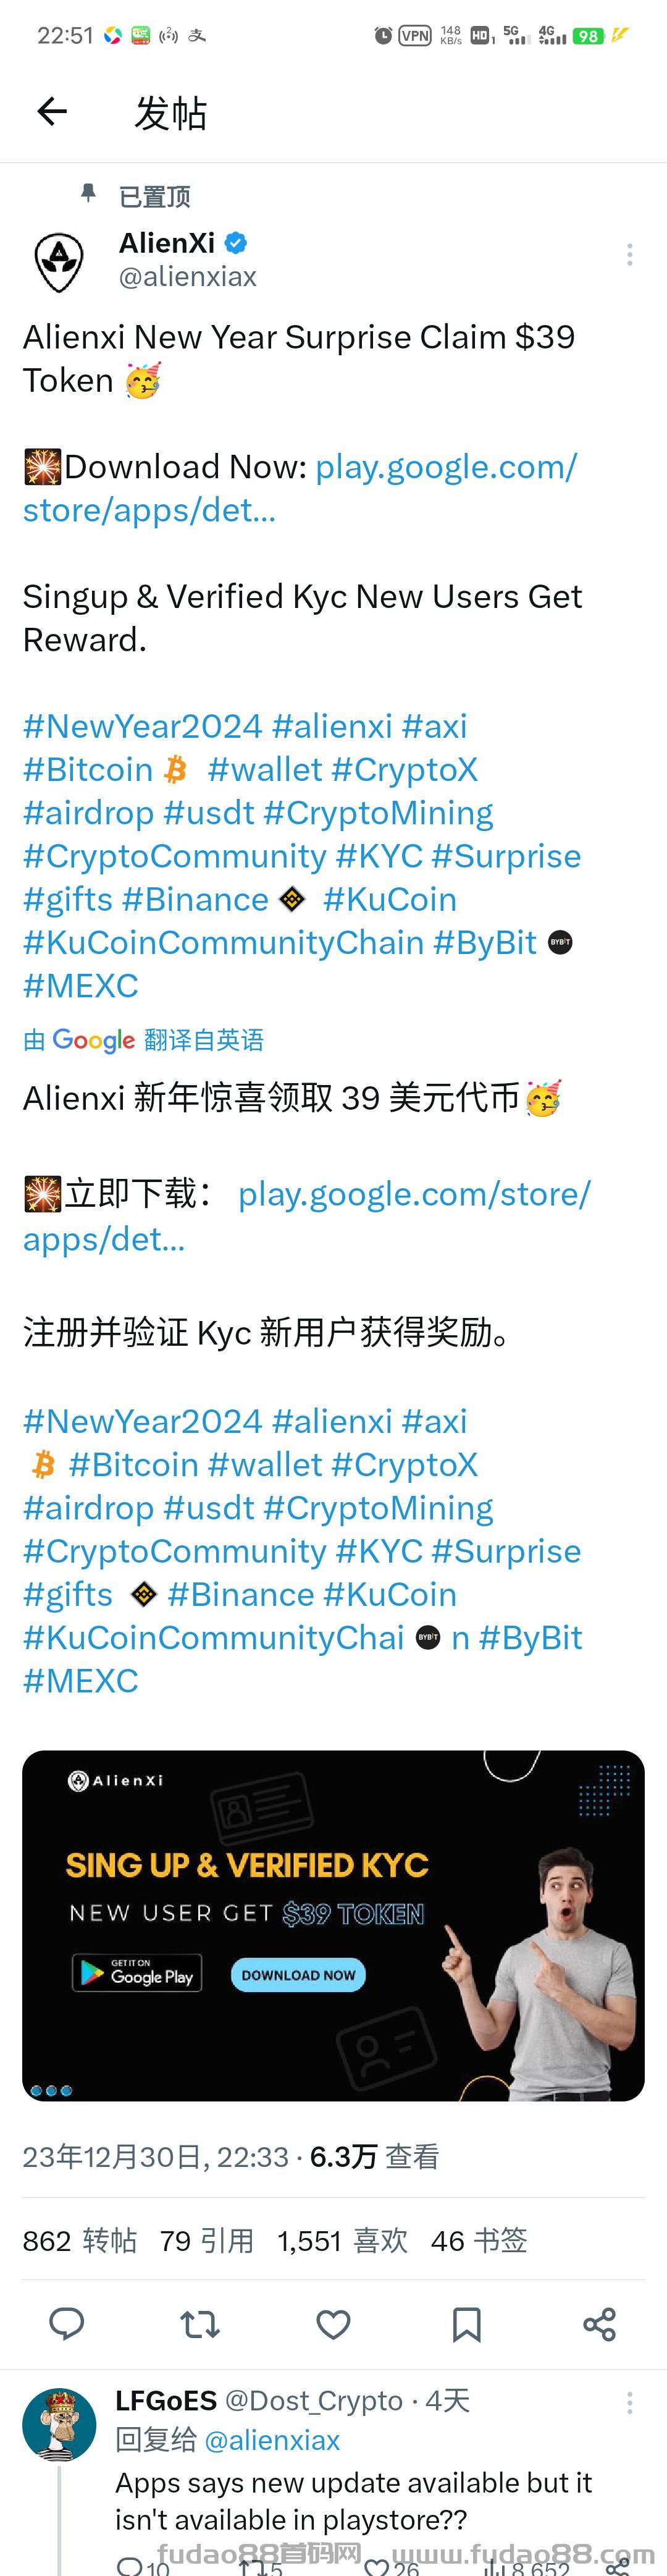 Alien Xi 国外项目推特很火，外星人即将煮网上市，K认证